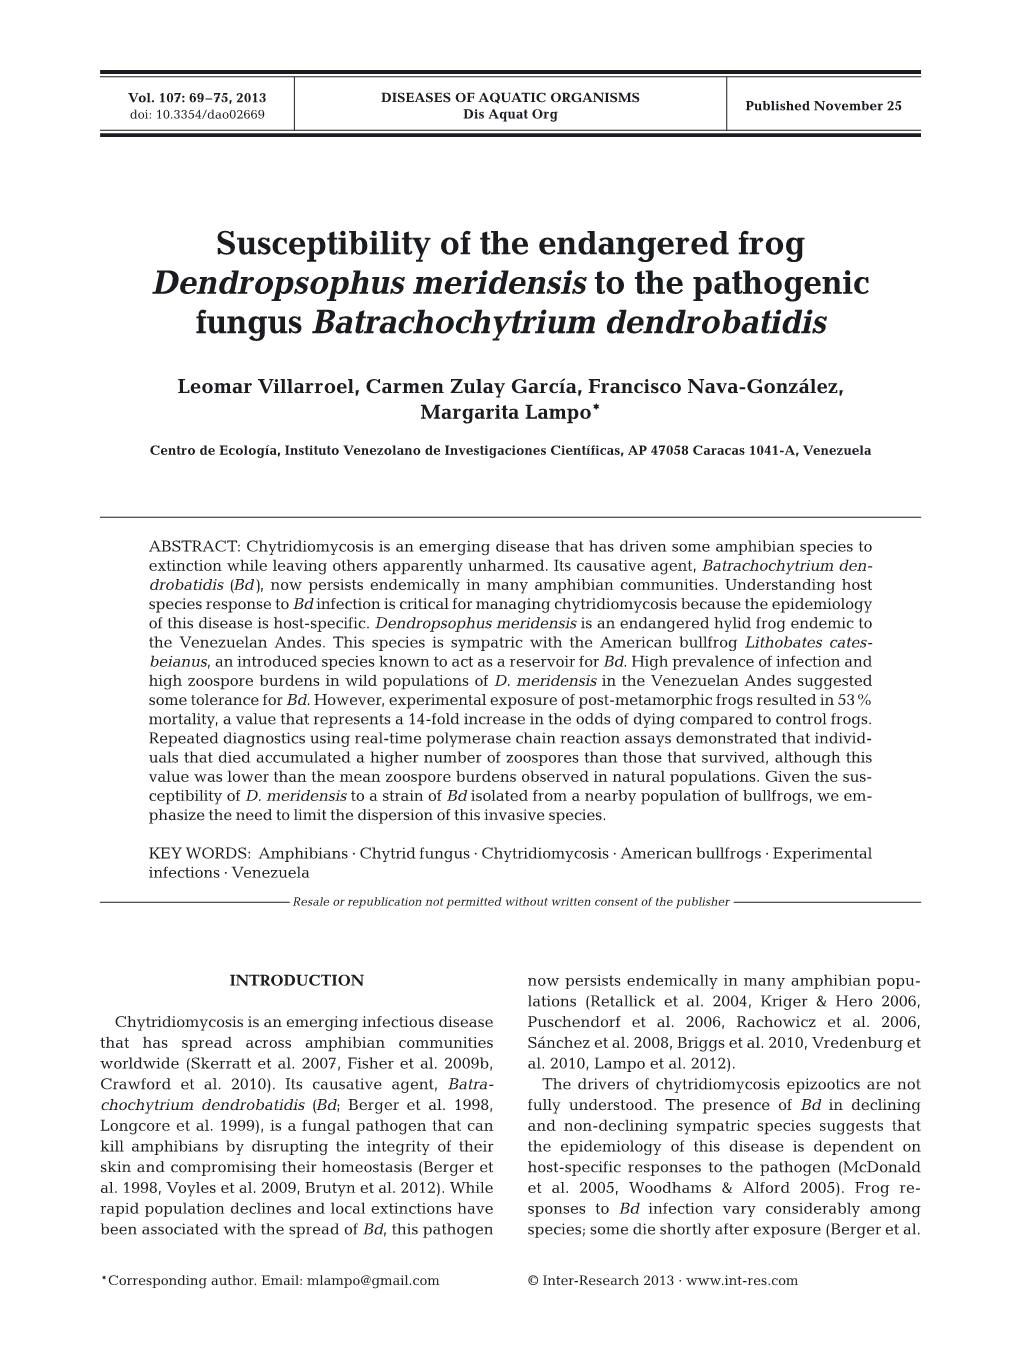 Susceptibility of the Endangered Frog Dendropsophus Meridensis to the Pathogenic Fungus Batrachochytrium Dendrobatidis